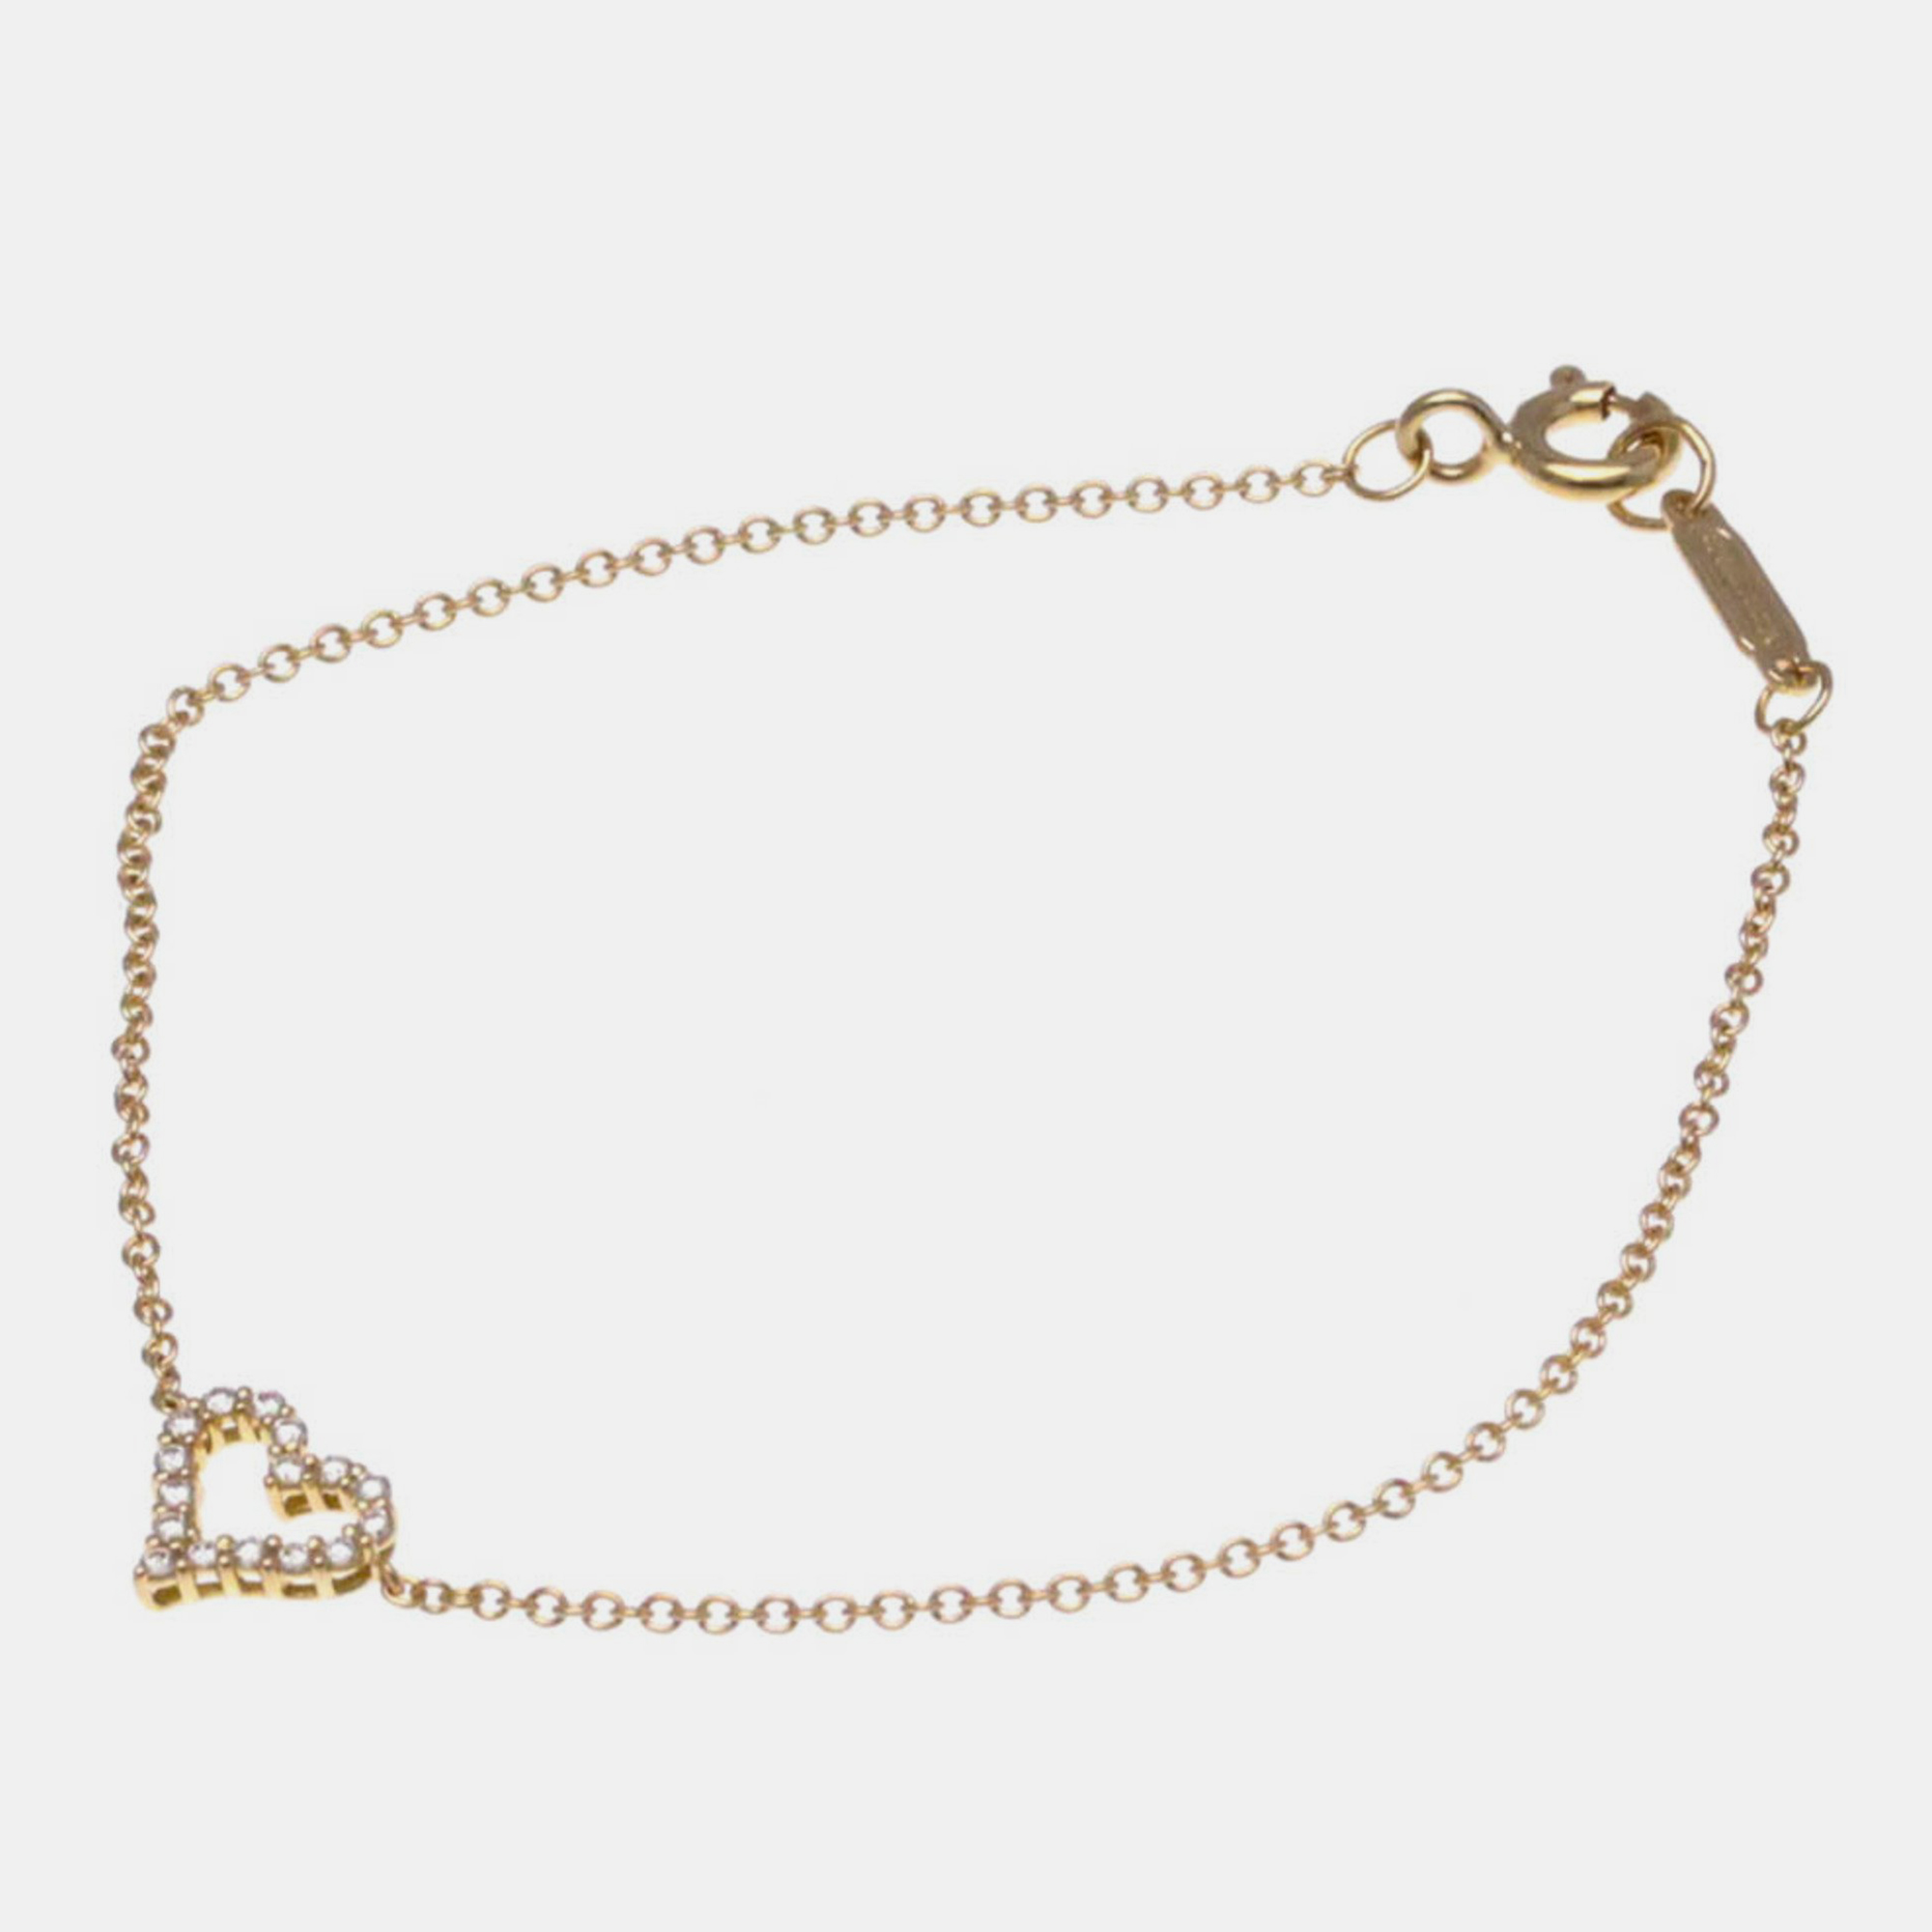 Tiffany & co. 18k rose gold and diamond heart bracelet